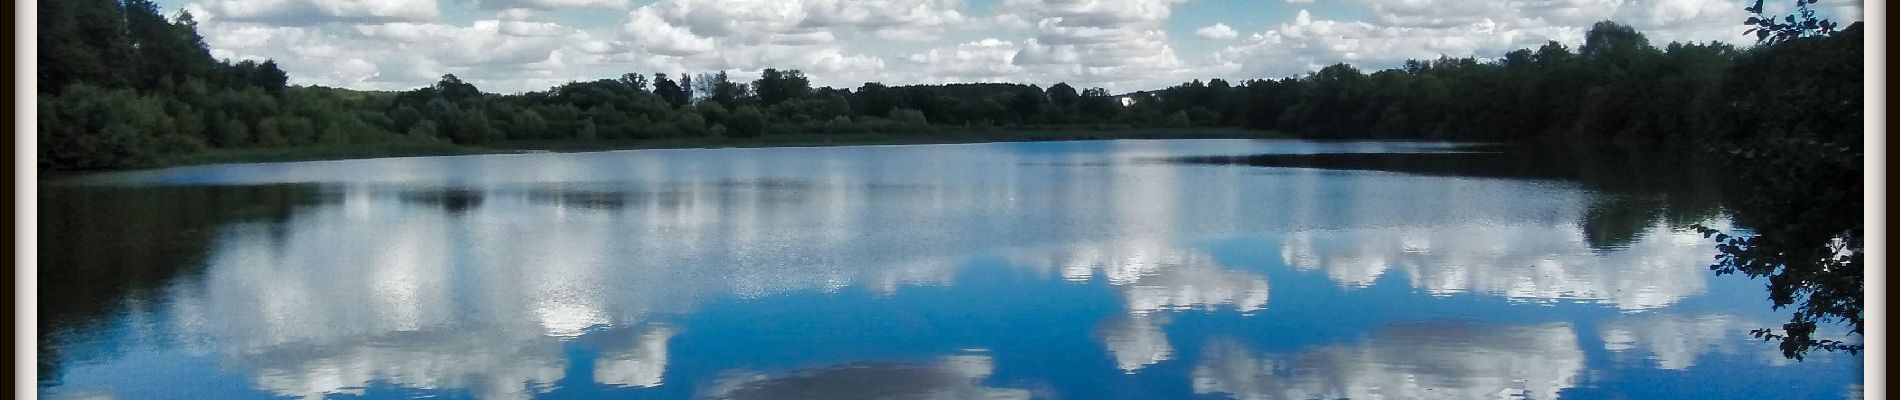 POI Virton - Les étangs de Latour - Photo